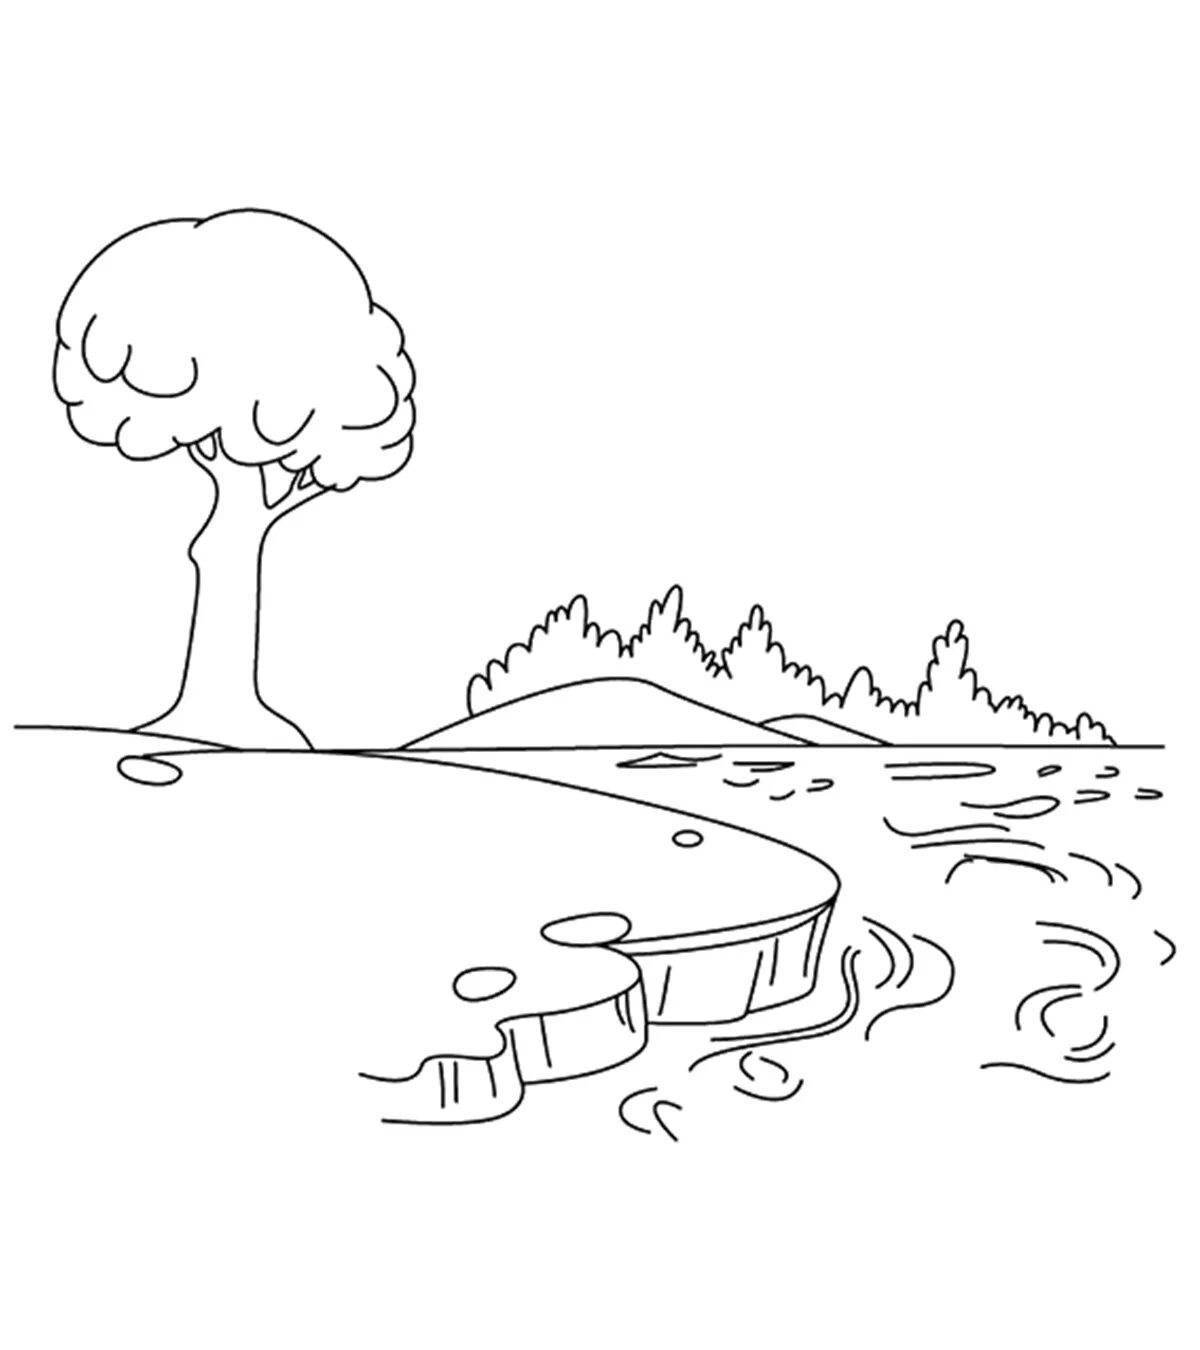 Calming lake coloring page